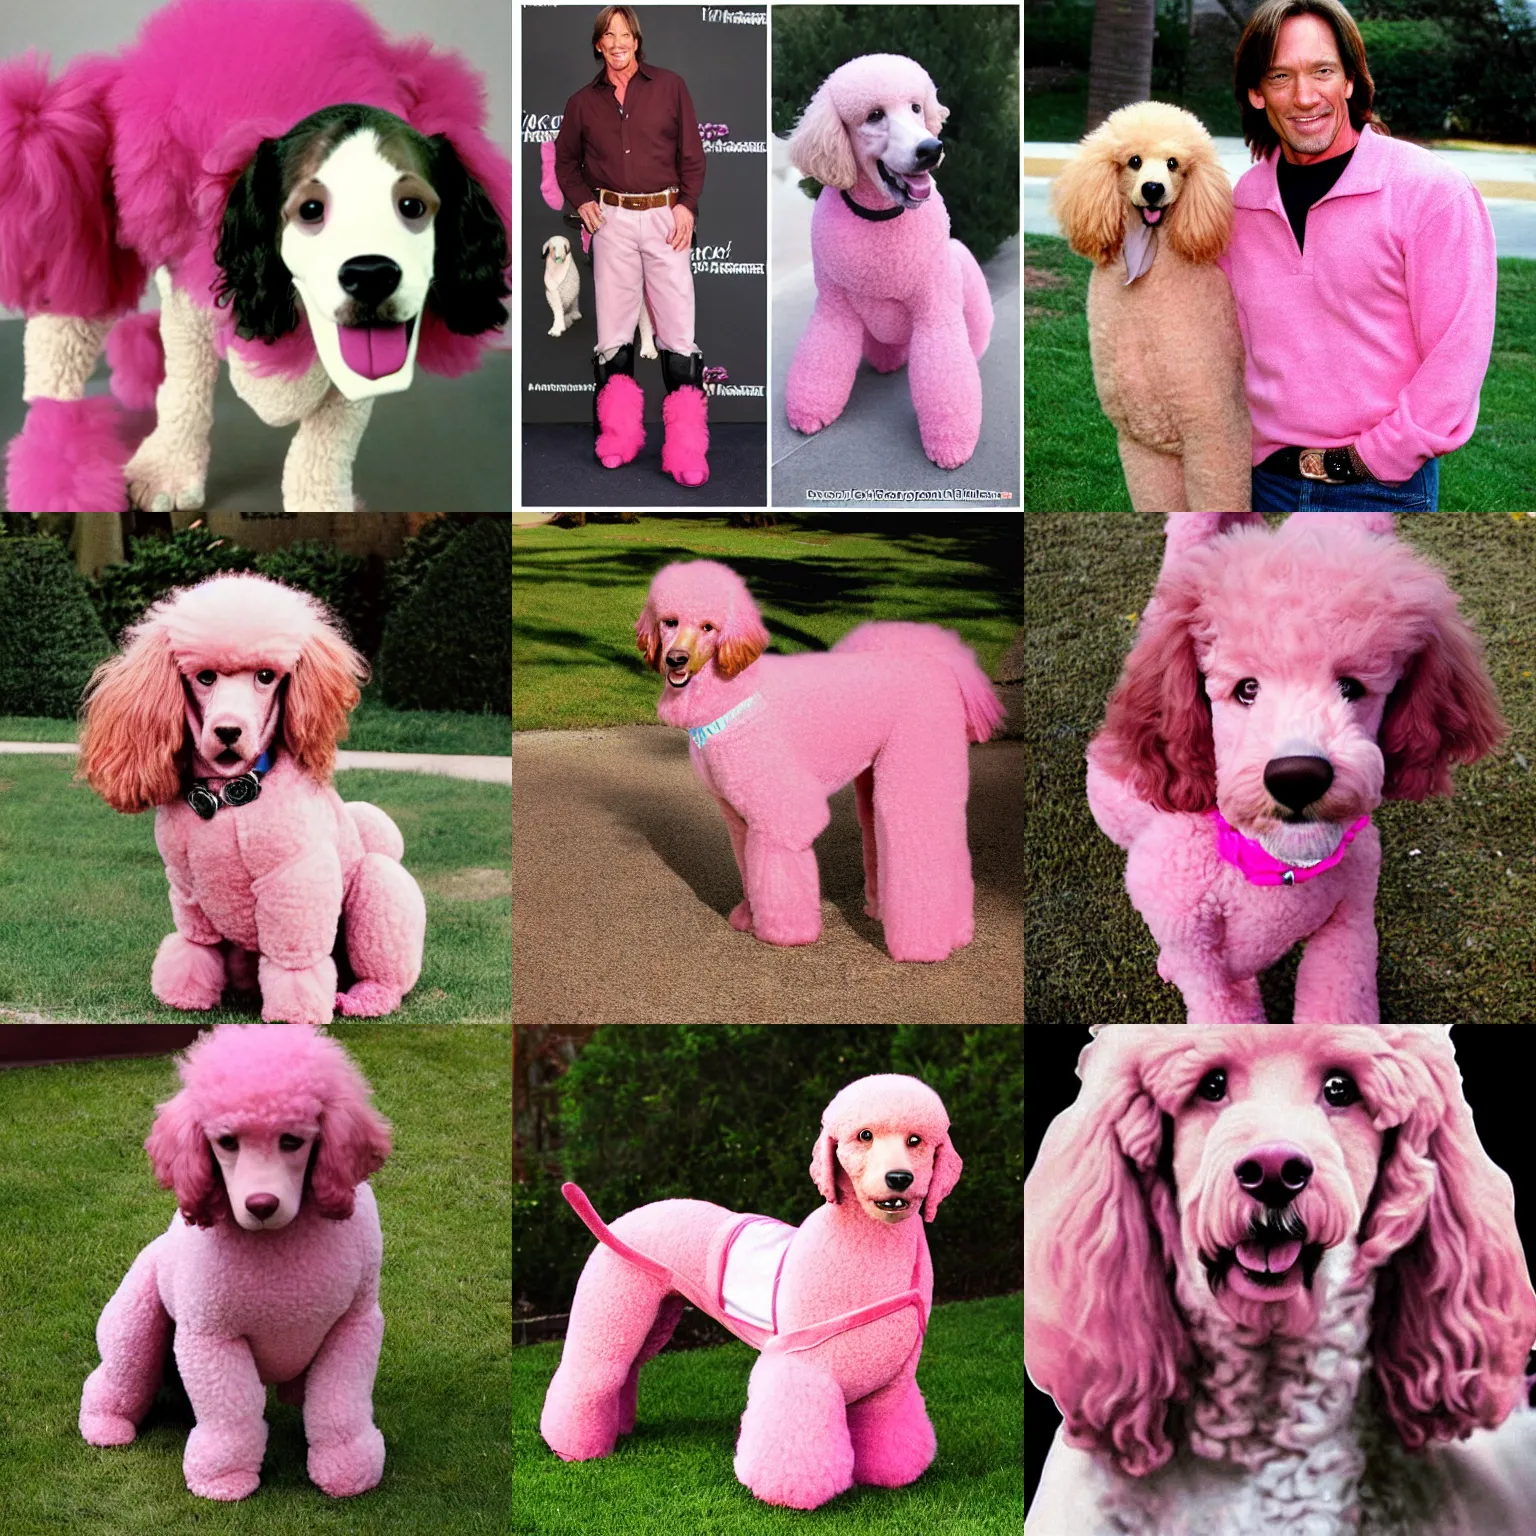 Prompt: kevin sorbo anthropomorphic pink poodle